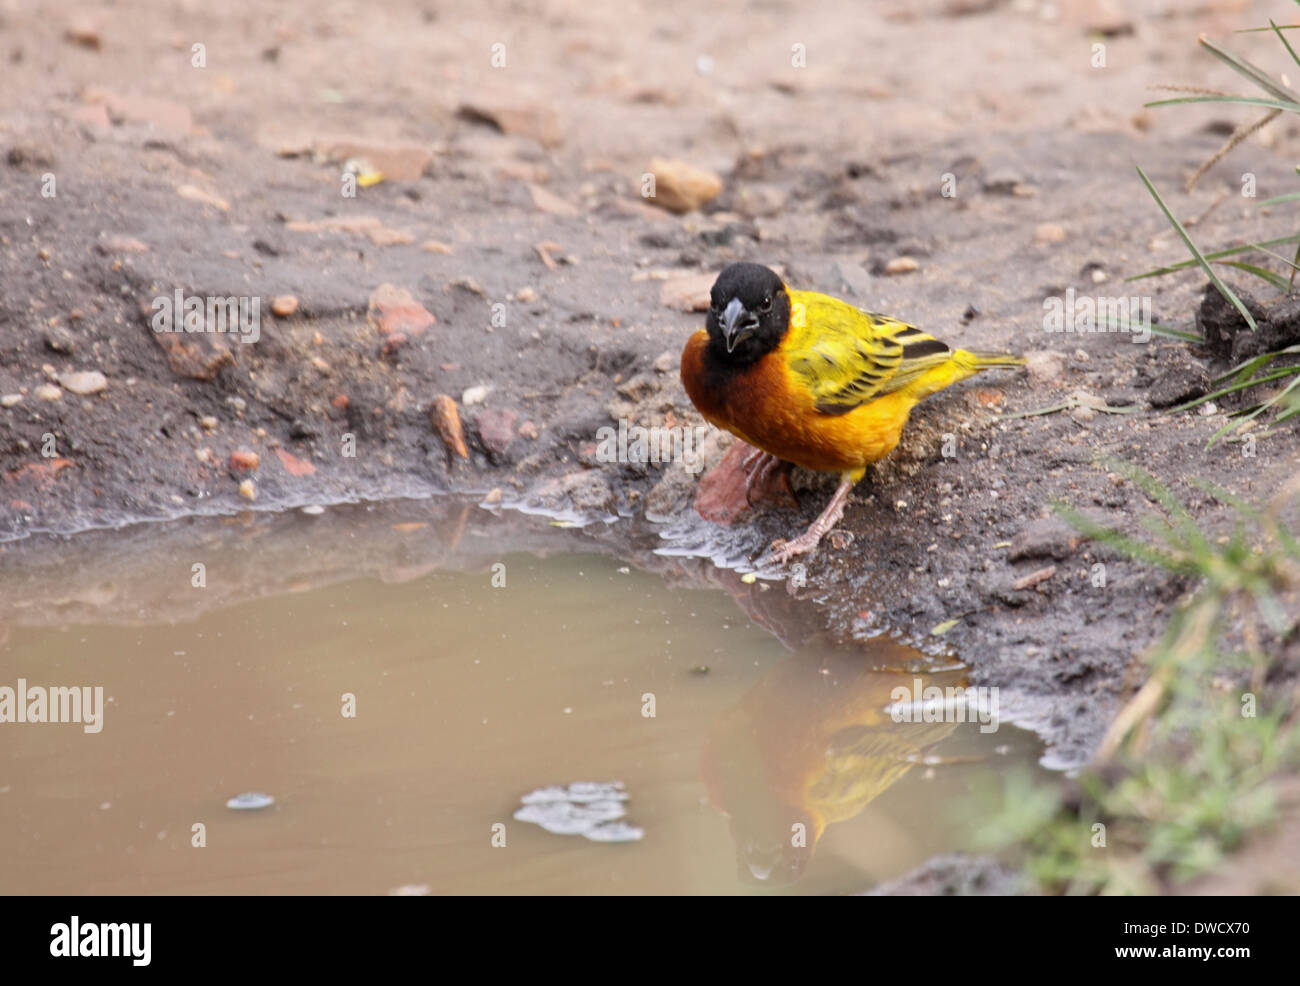 Yellow-backed weaver bird at puddle in Uganda Stock Photo